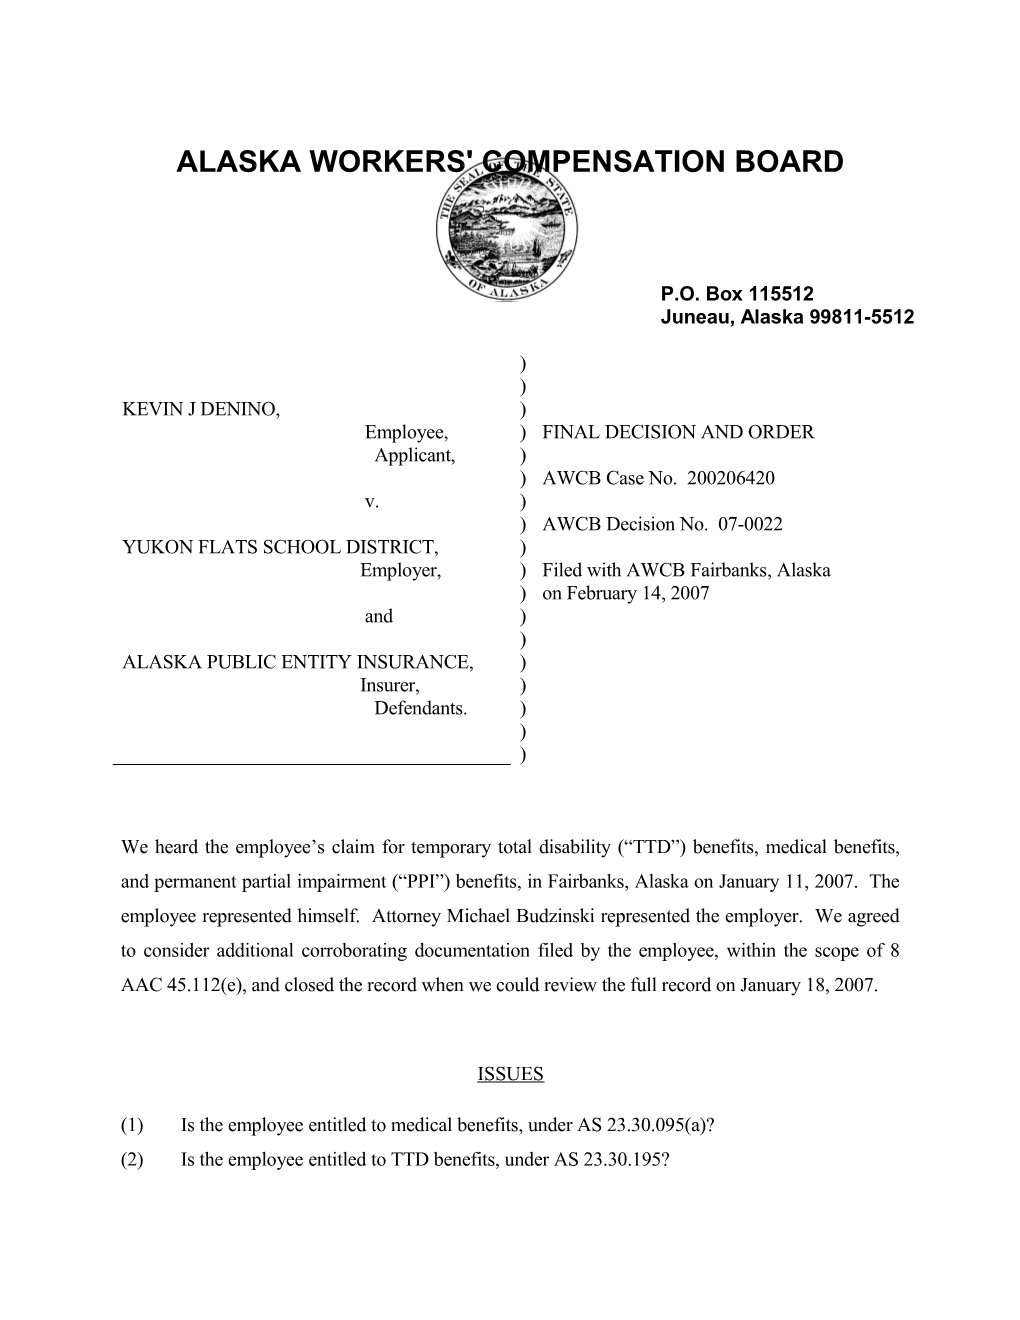 Alaska Workers' Compensation Board s13